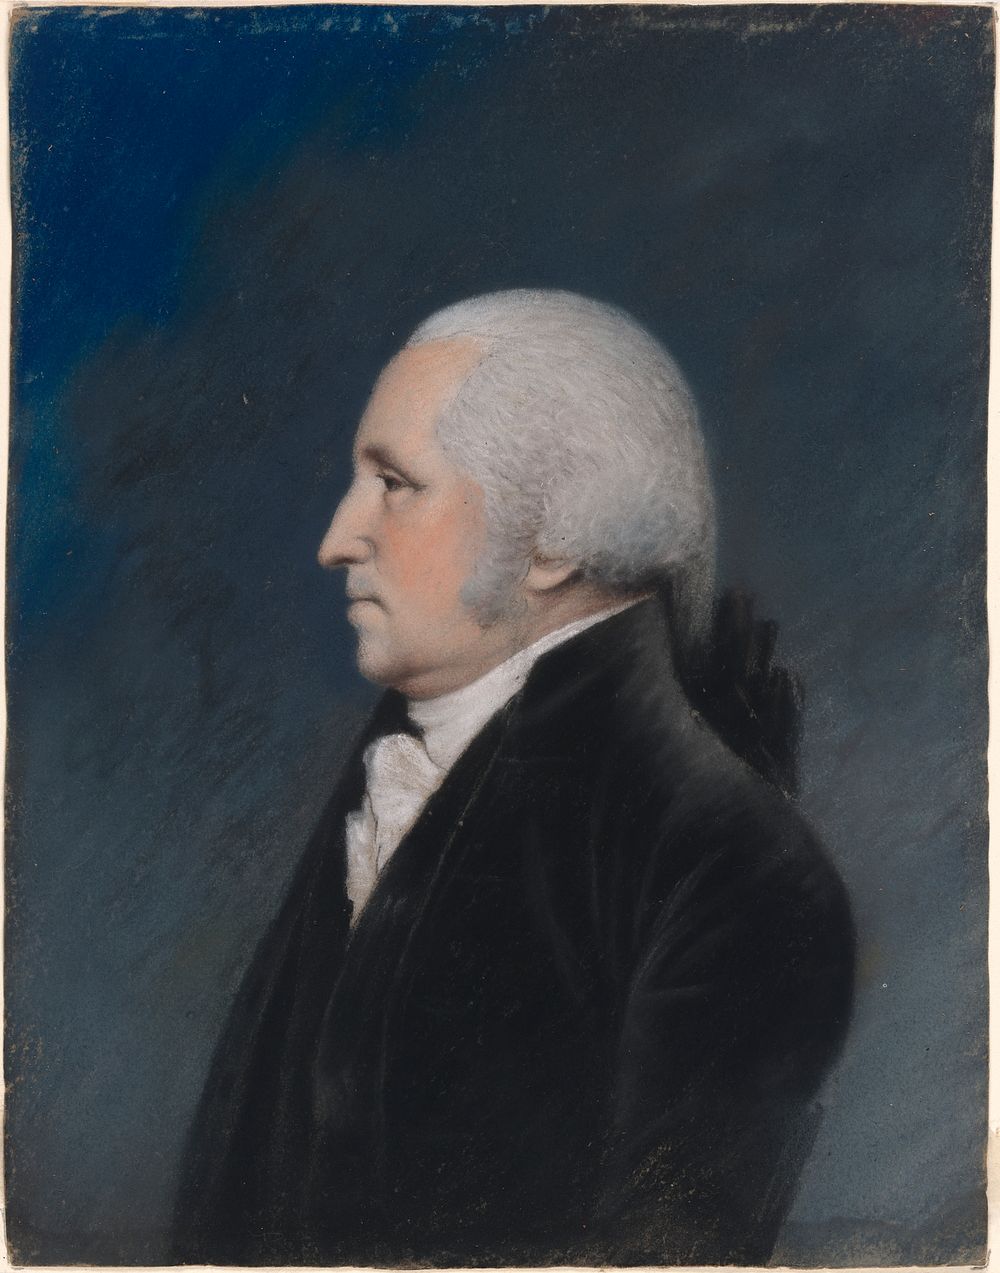 George Washington by James Sharples